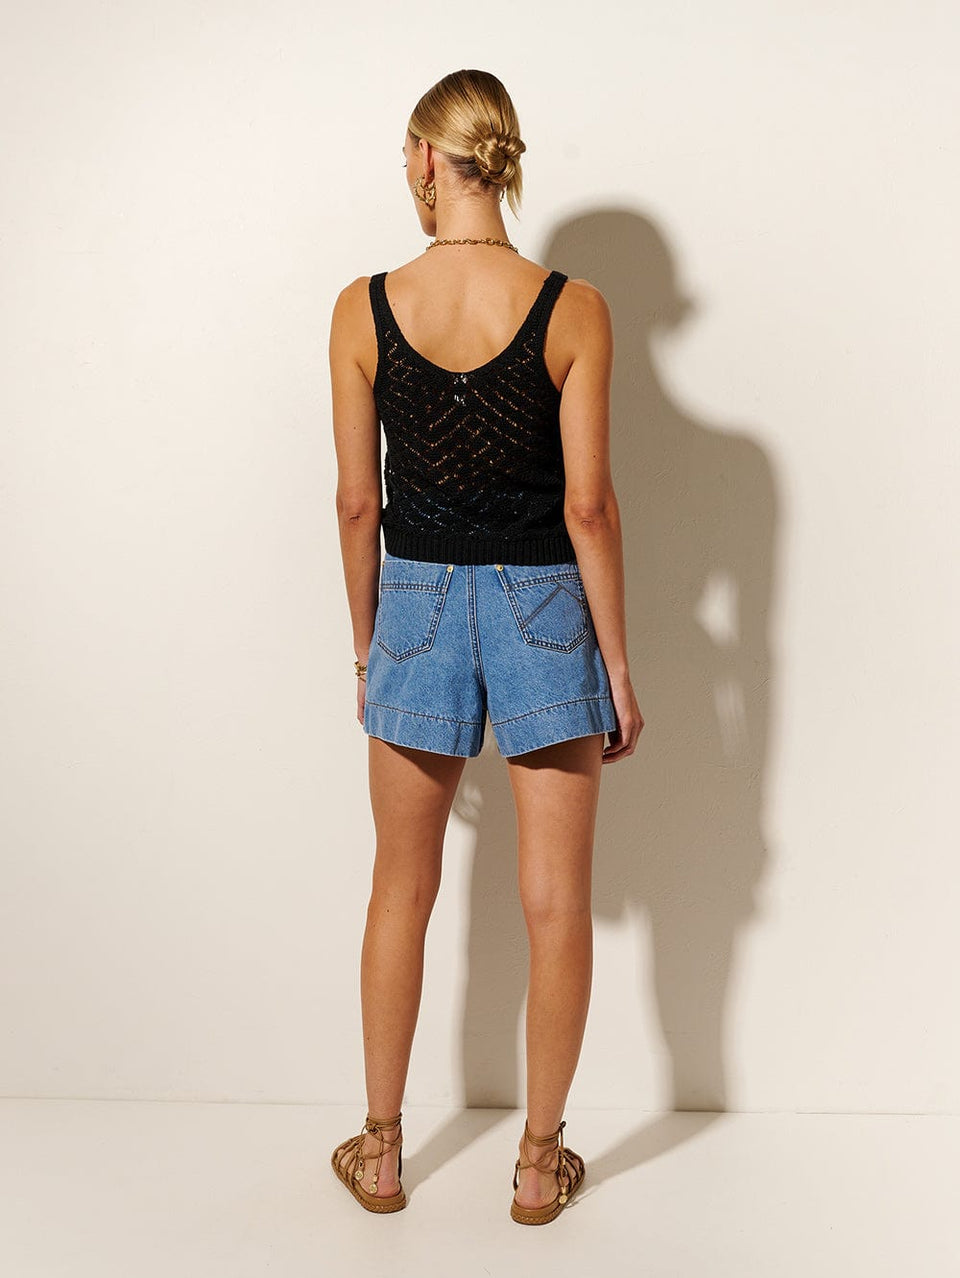 Irie Crochet Cami KIVARI | Model wears black crochet tank back view